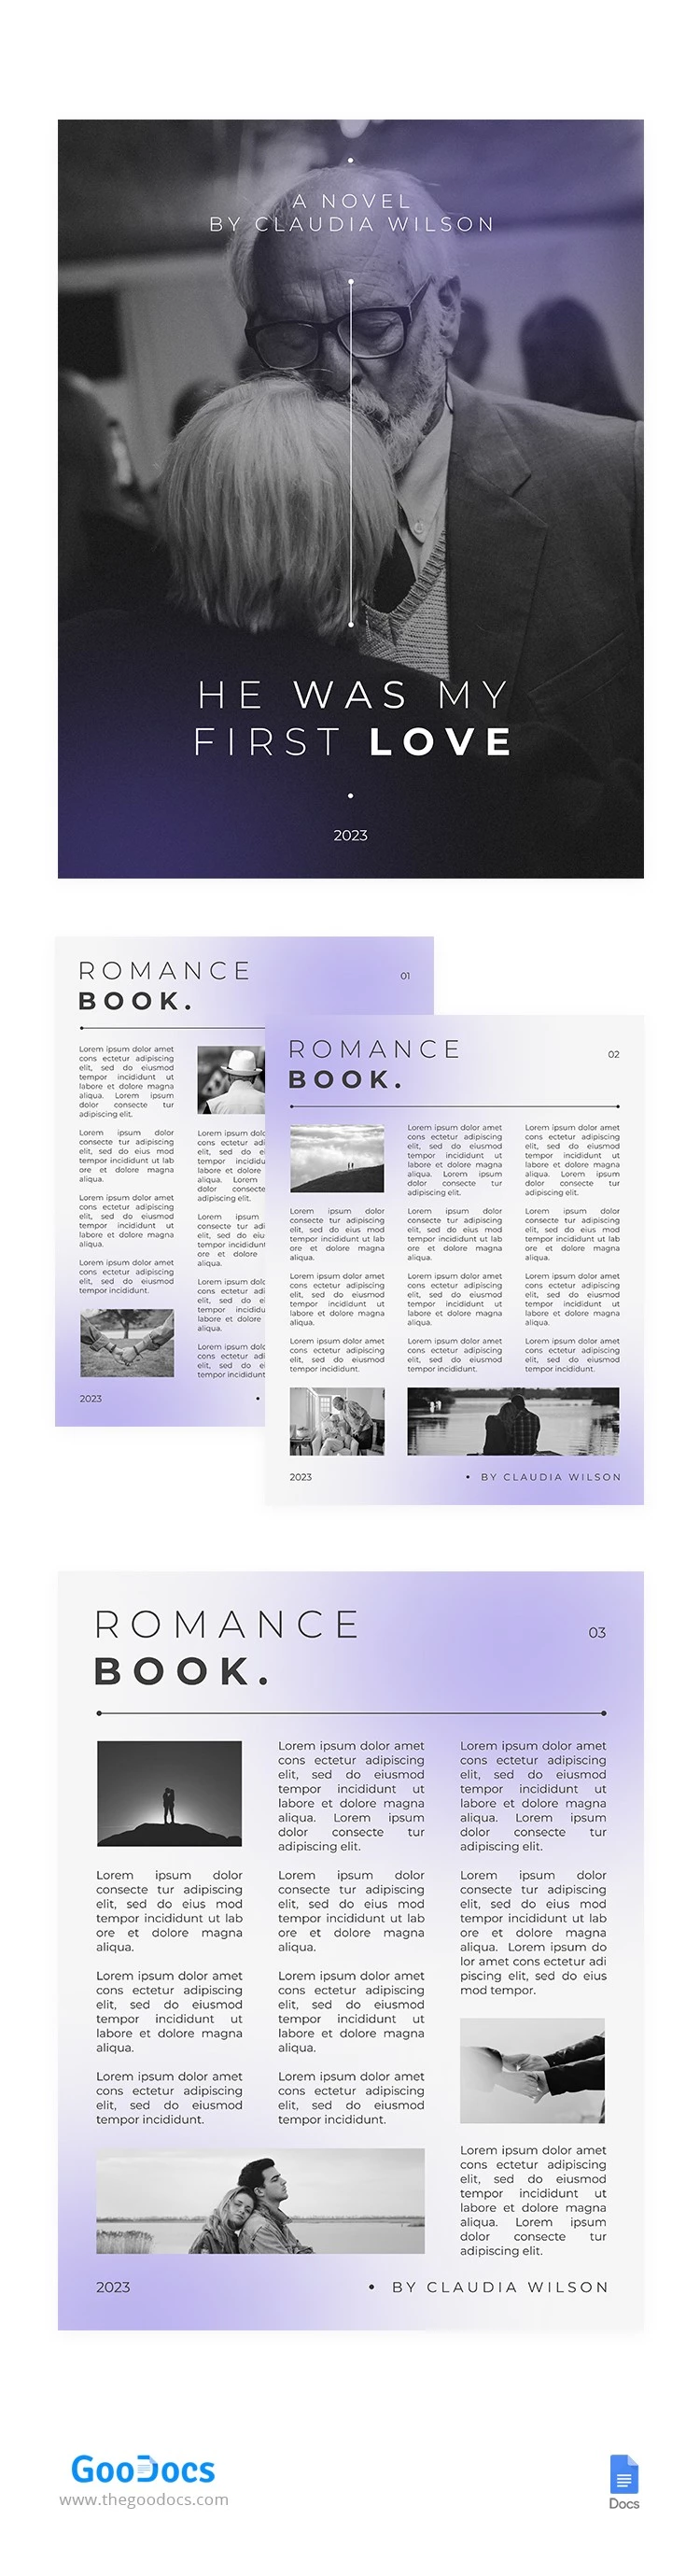 Livro de Romance Cinza - free Google Docs Template - 10066010